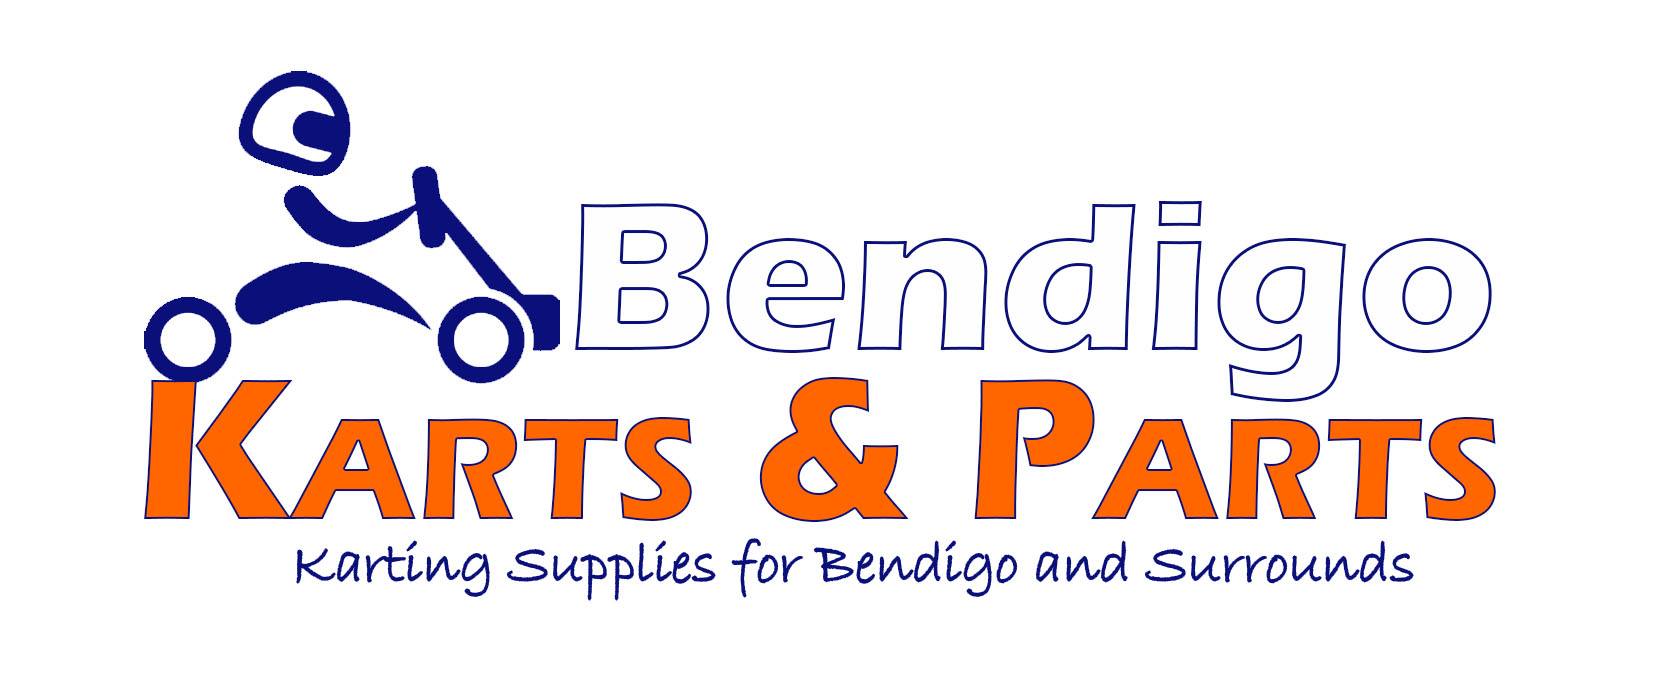 Welcome to Bendigo Karts & Parts—Your Go Kart Shop in Bendigo